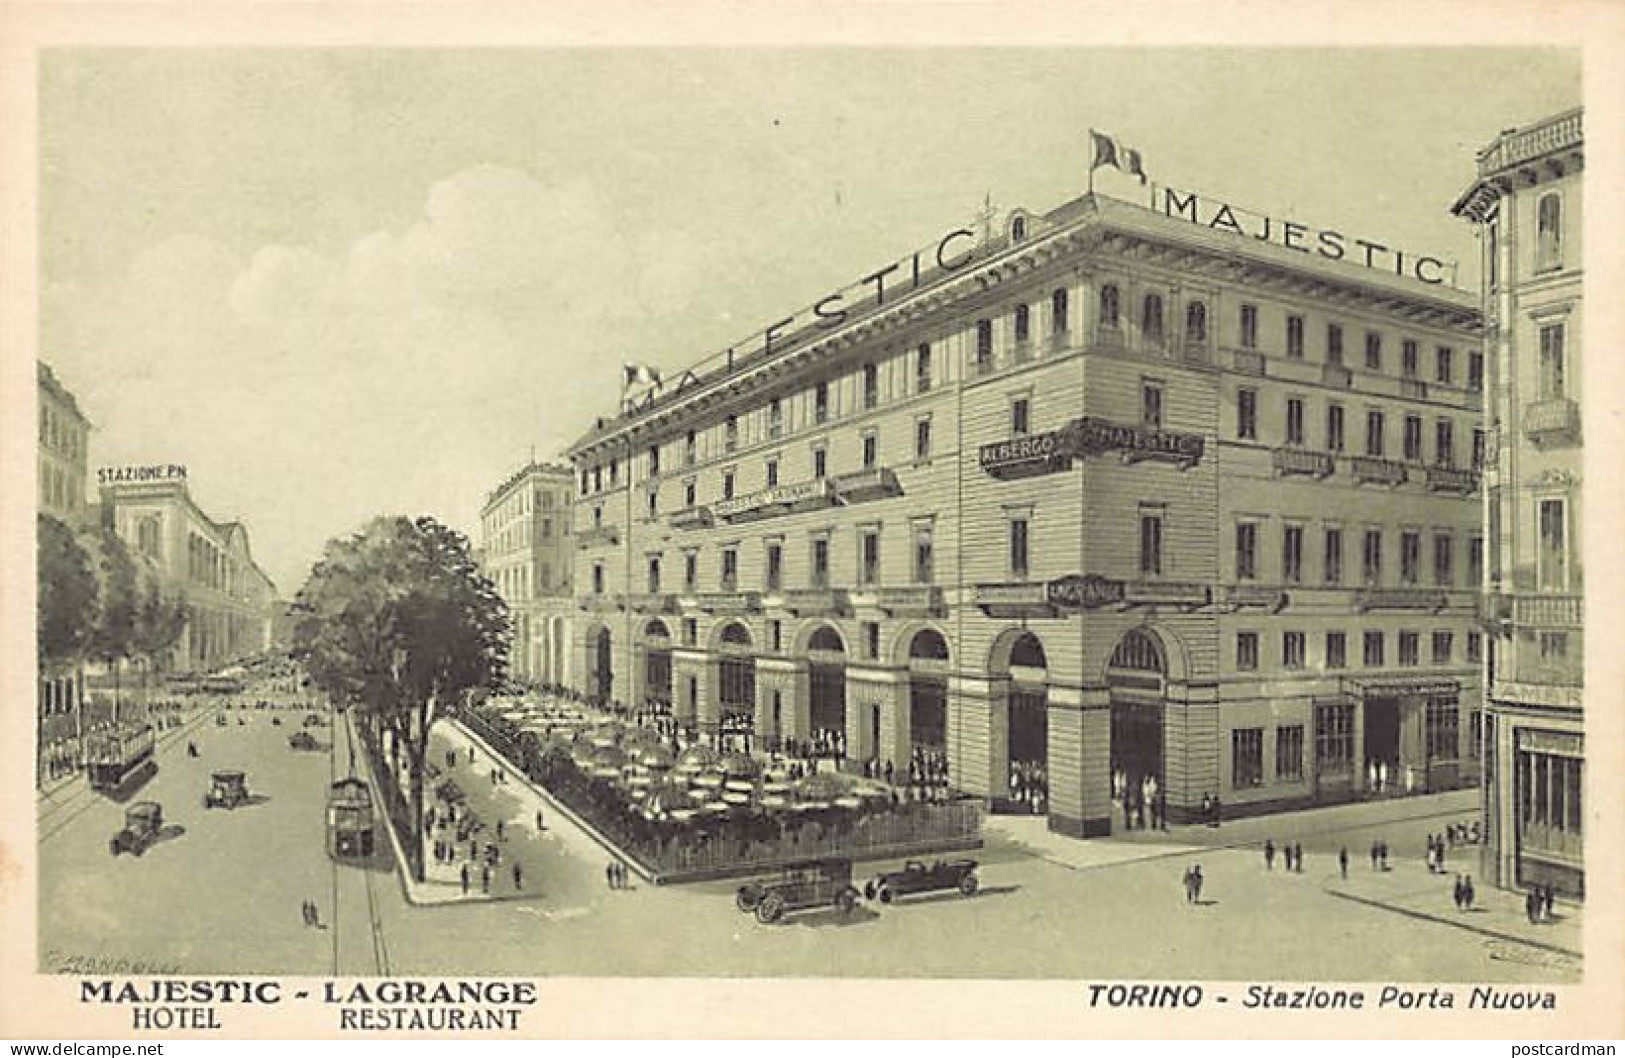  TORINO - Hotel Majestic Lagrange - Stazione Porta Nuova - Cafés, Hôtels & Restaurants